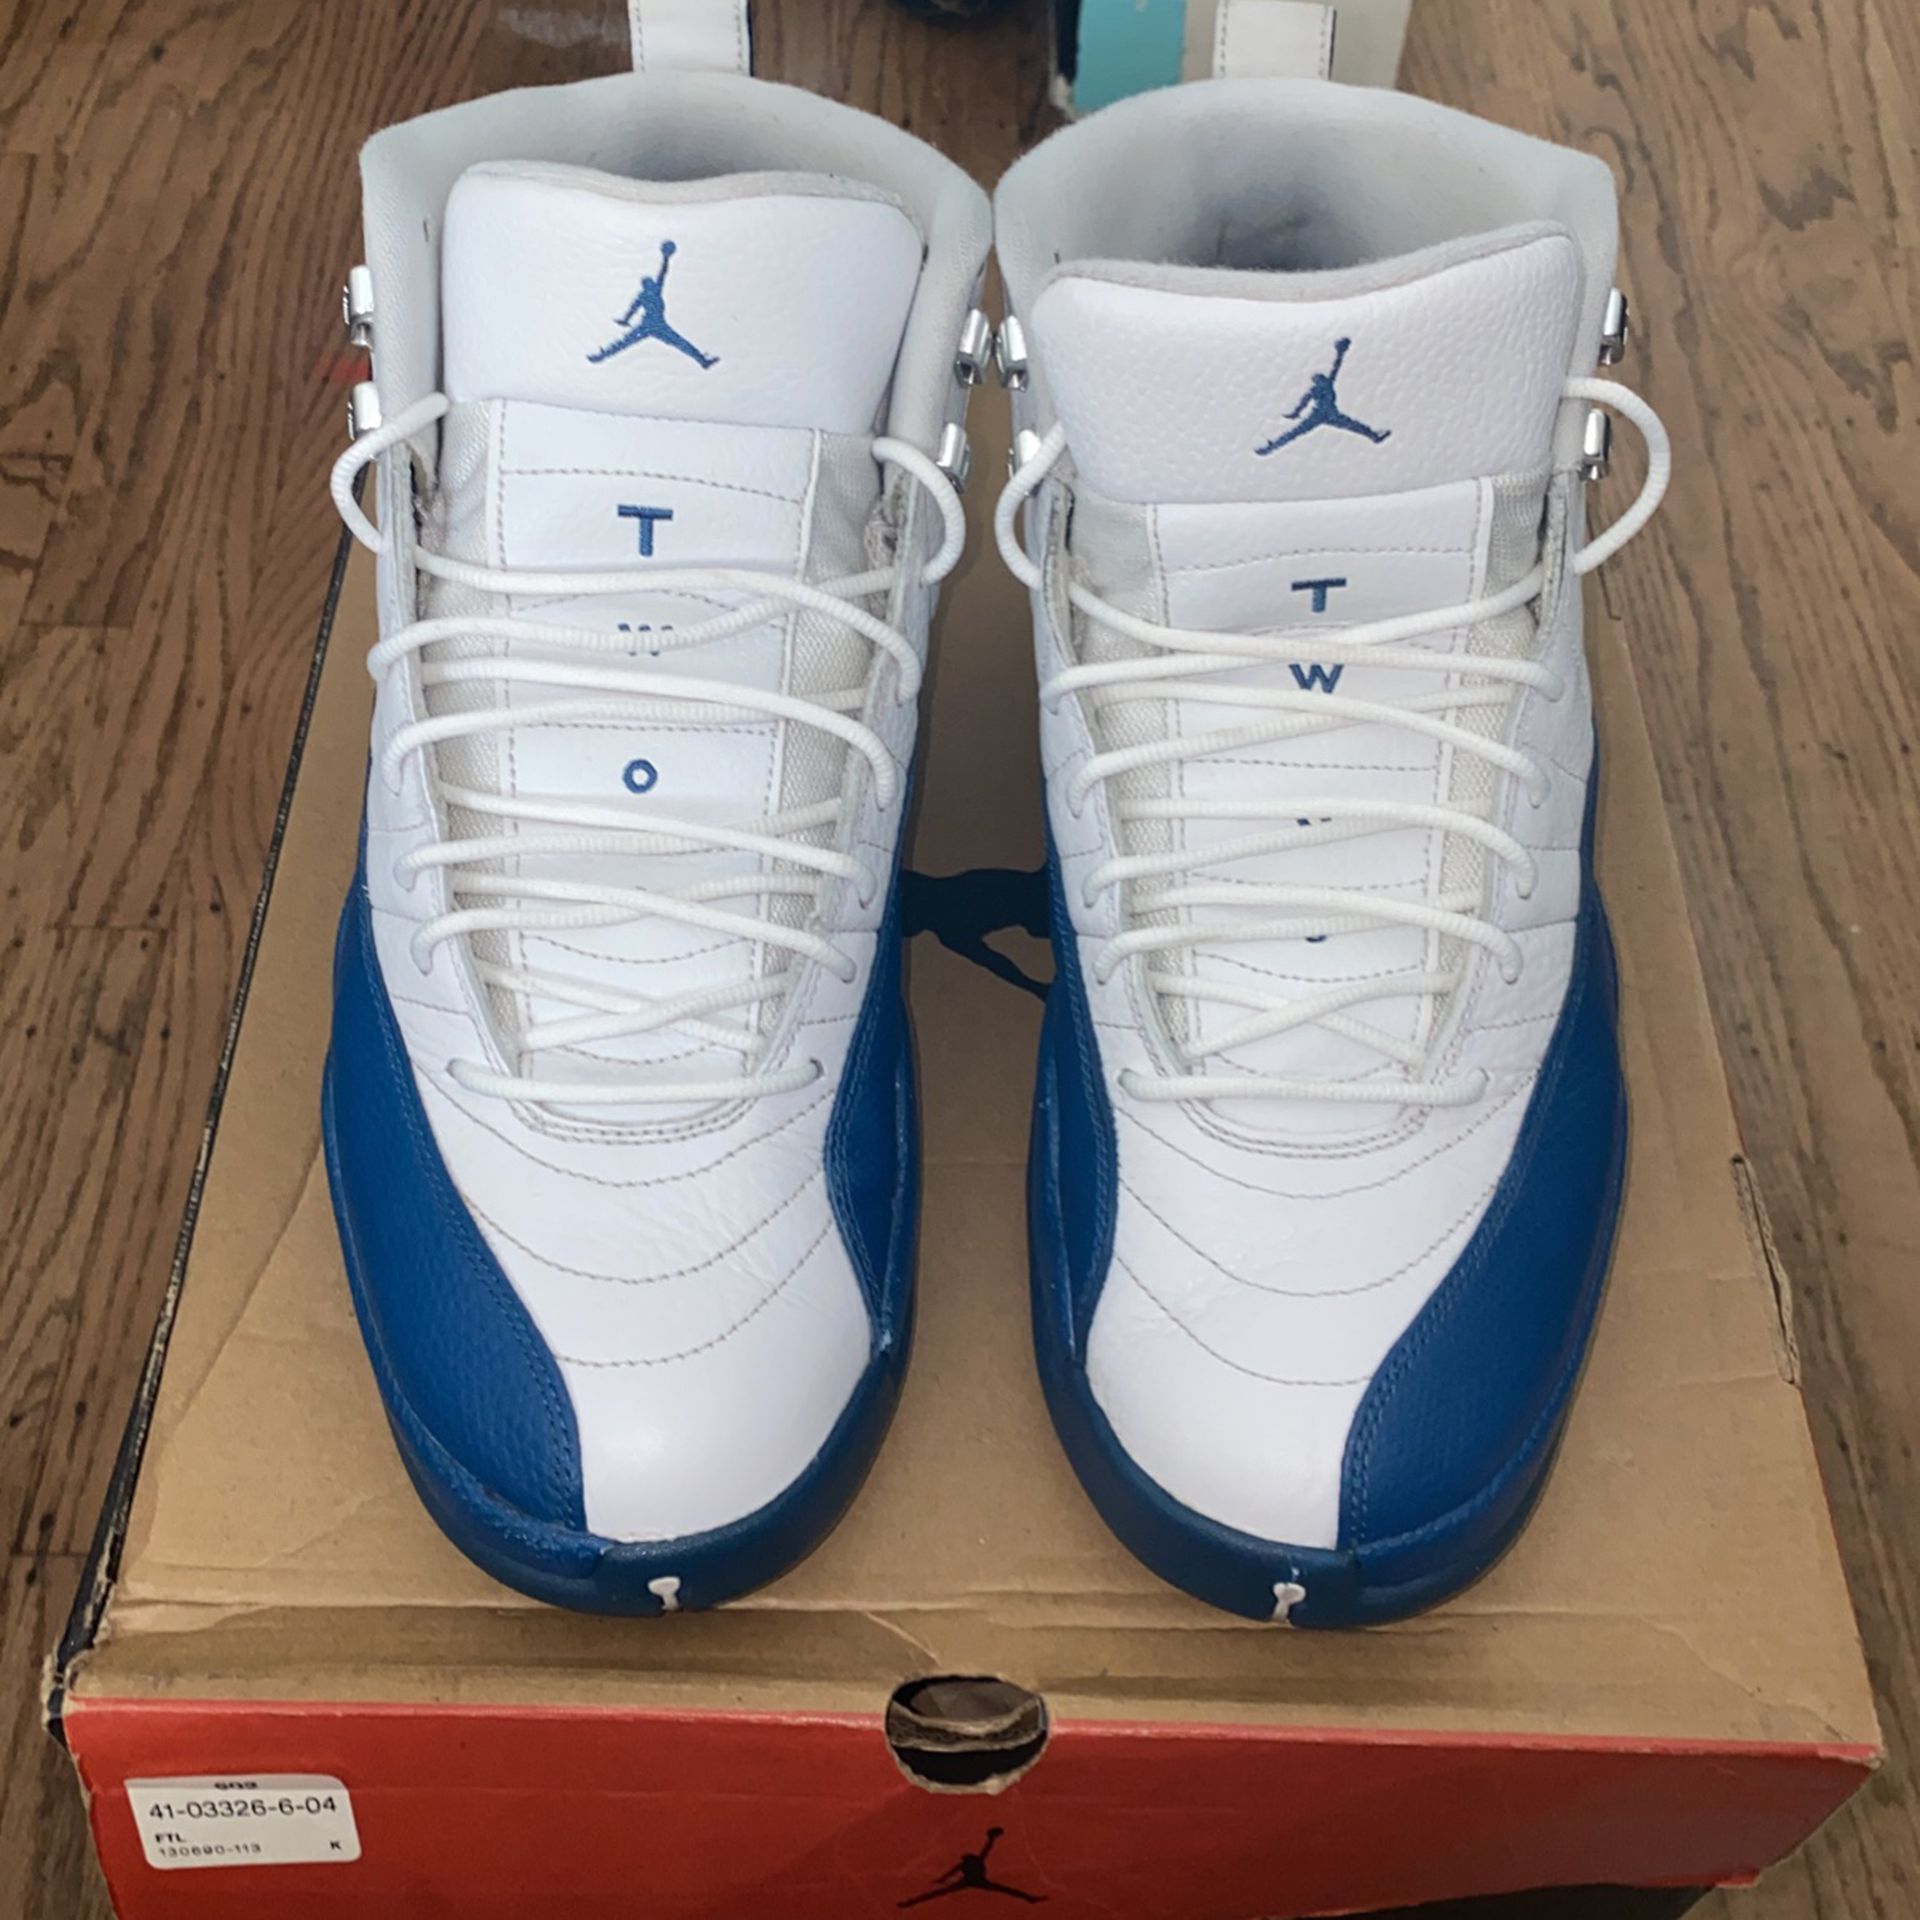 Jordan Retro 12 - French Blue 13s (size 11.5)